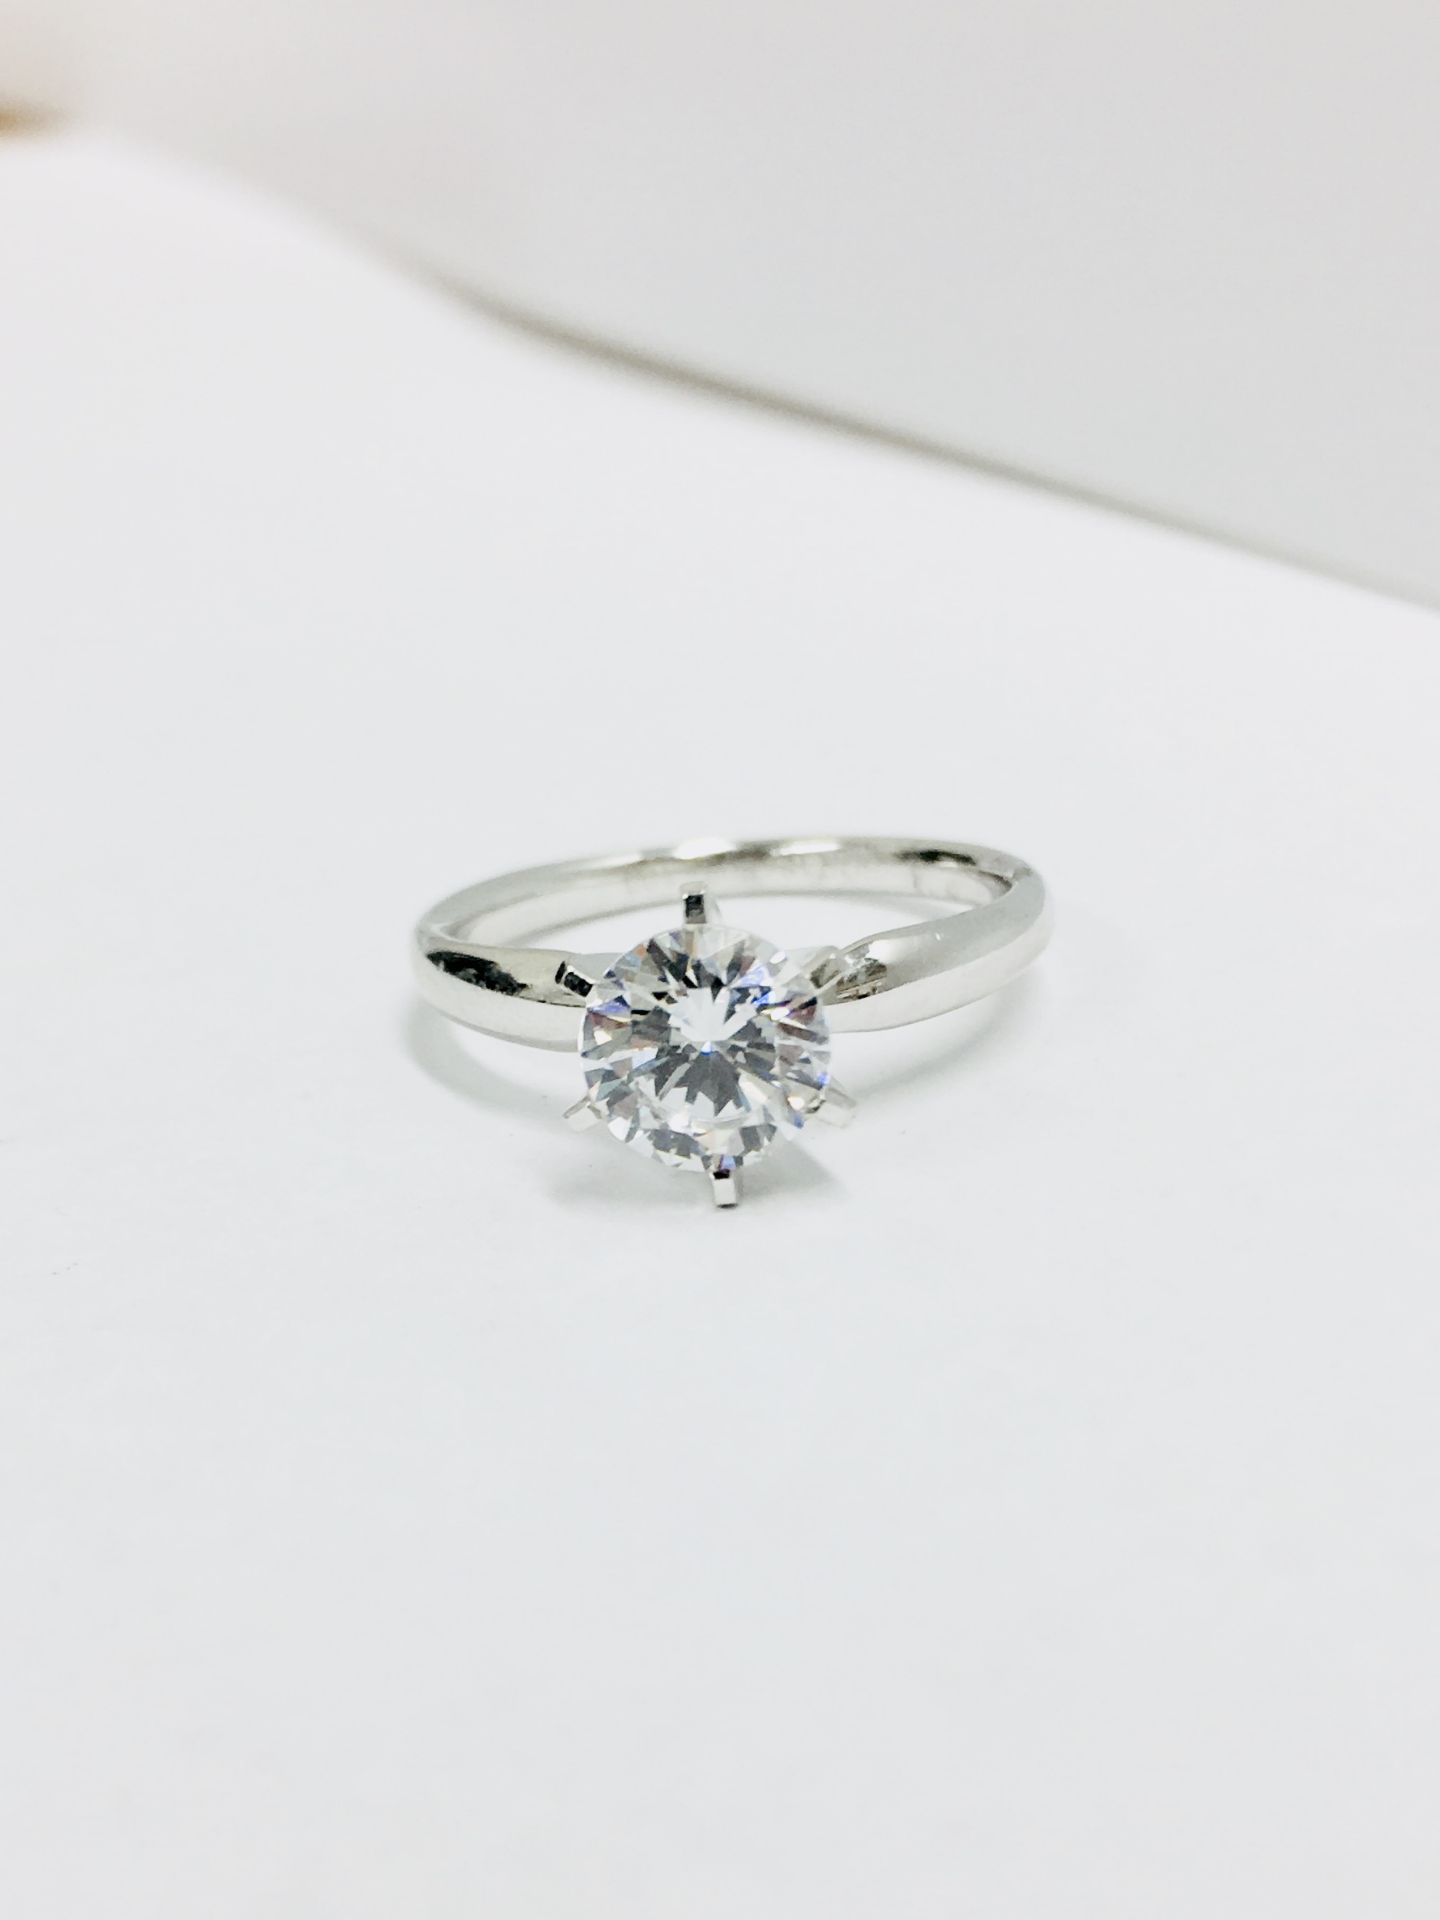 Platinum diamond solitaire ring 6 claw,0.50ct brilliant cut diamond h colour vs clarity enhanced,3.